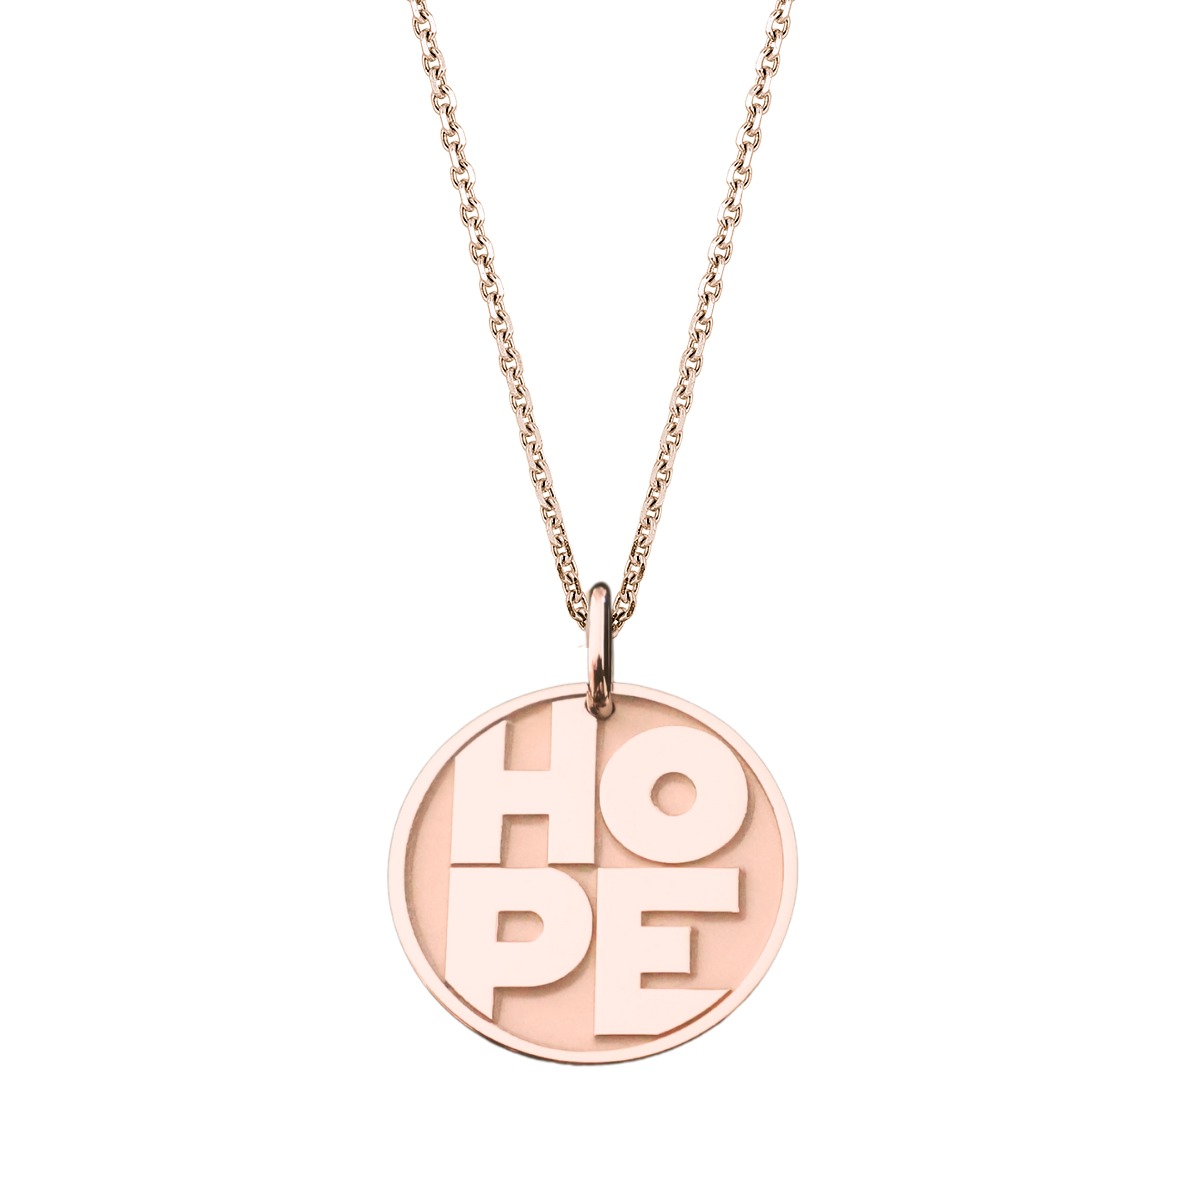 pendentif medaille hope, espoir or rose 18 carats